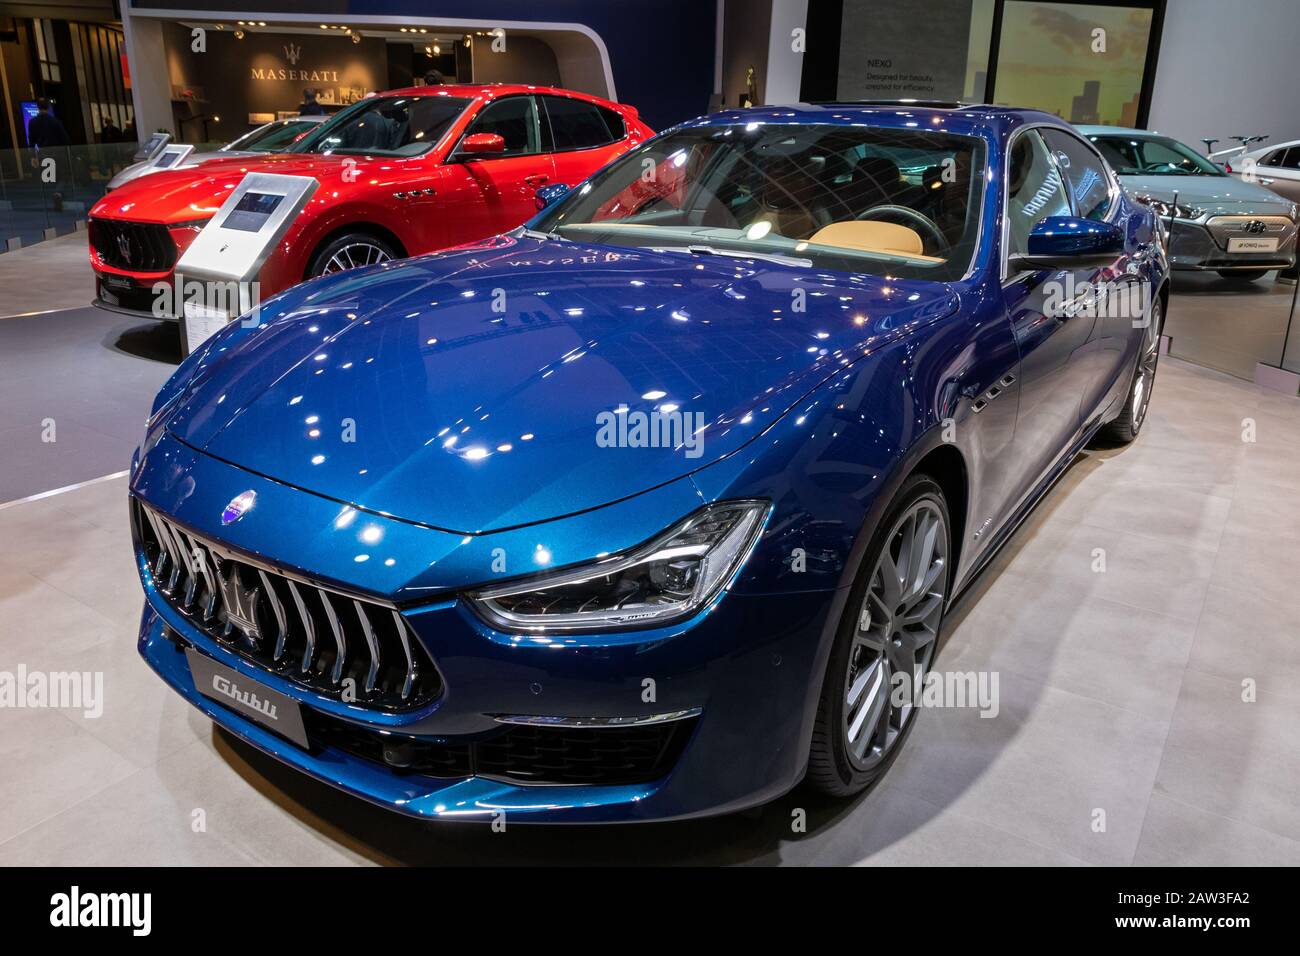 Brüssel - 9. JANUAR 2020: Maserati Ghibli-Auto präsentiert auf der Autosalon 2020 in Brüssel. Stockfoto